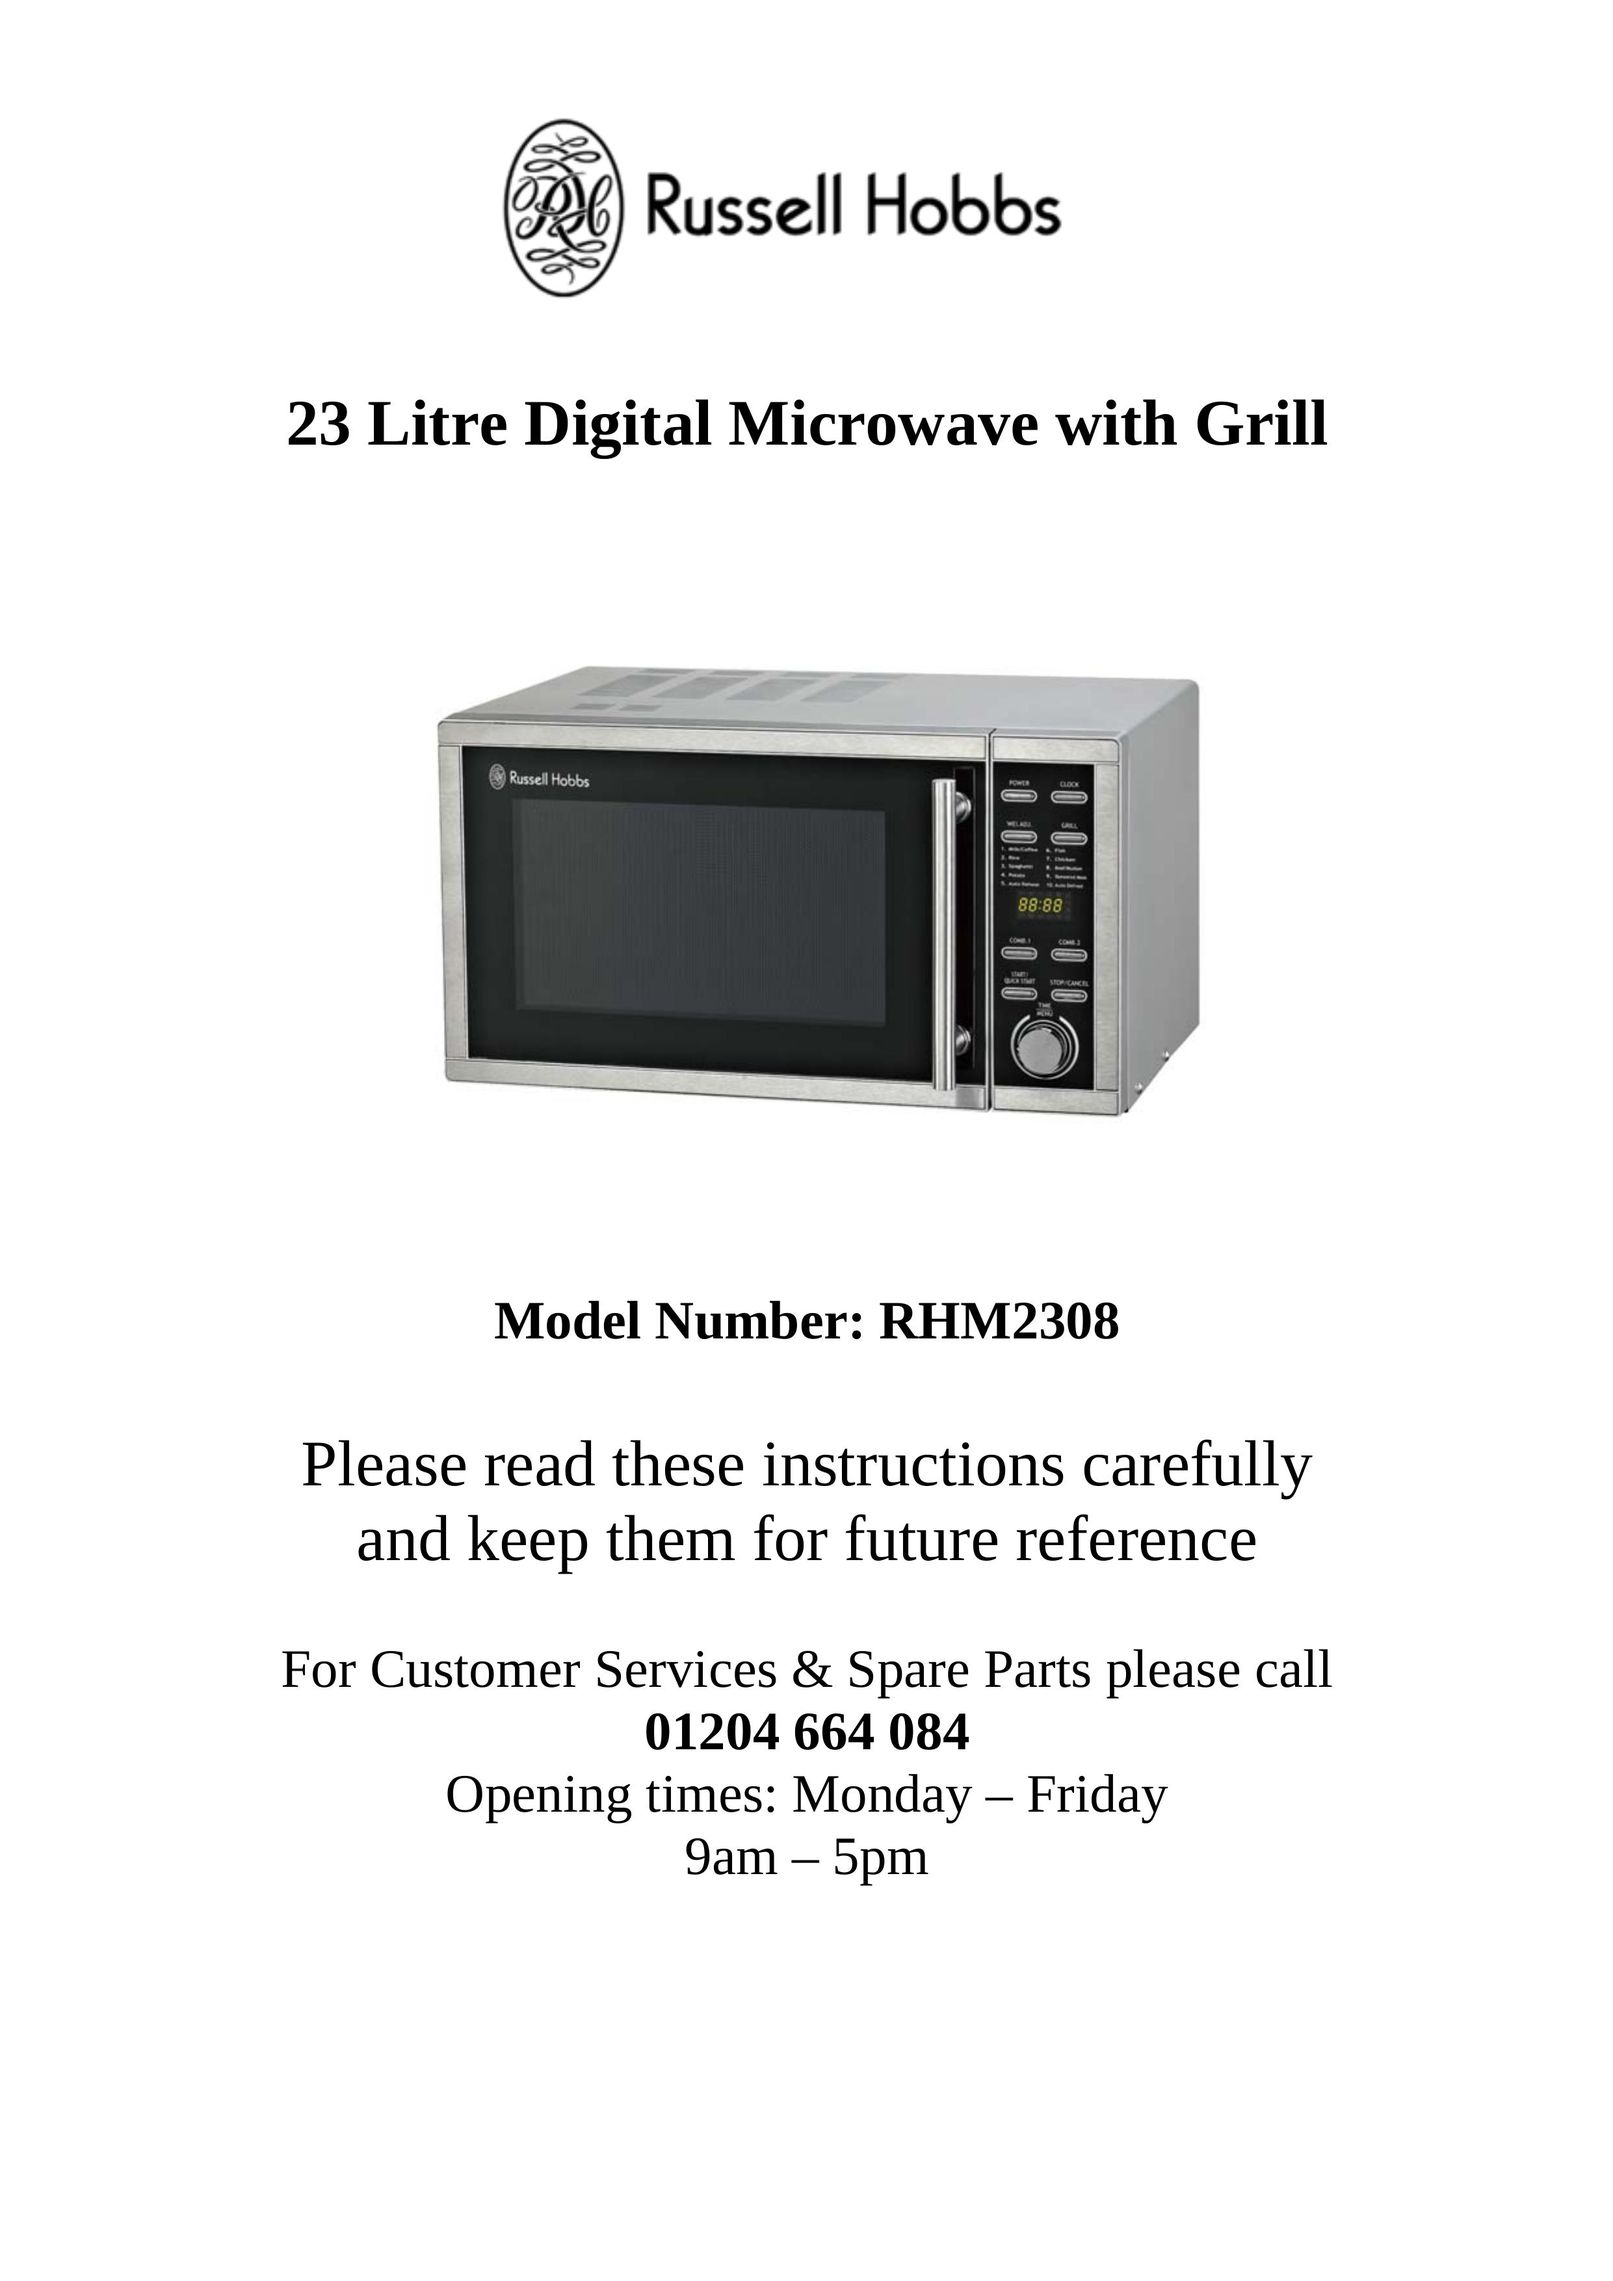 Russell Hobbs RHM2308 Microwave Oven User Manual